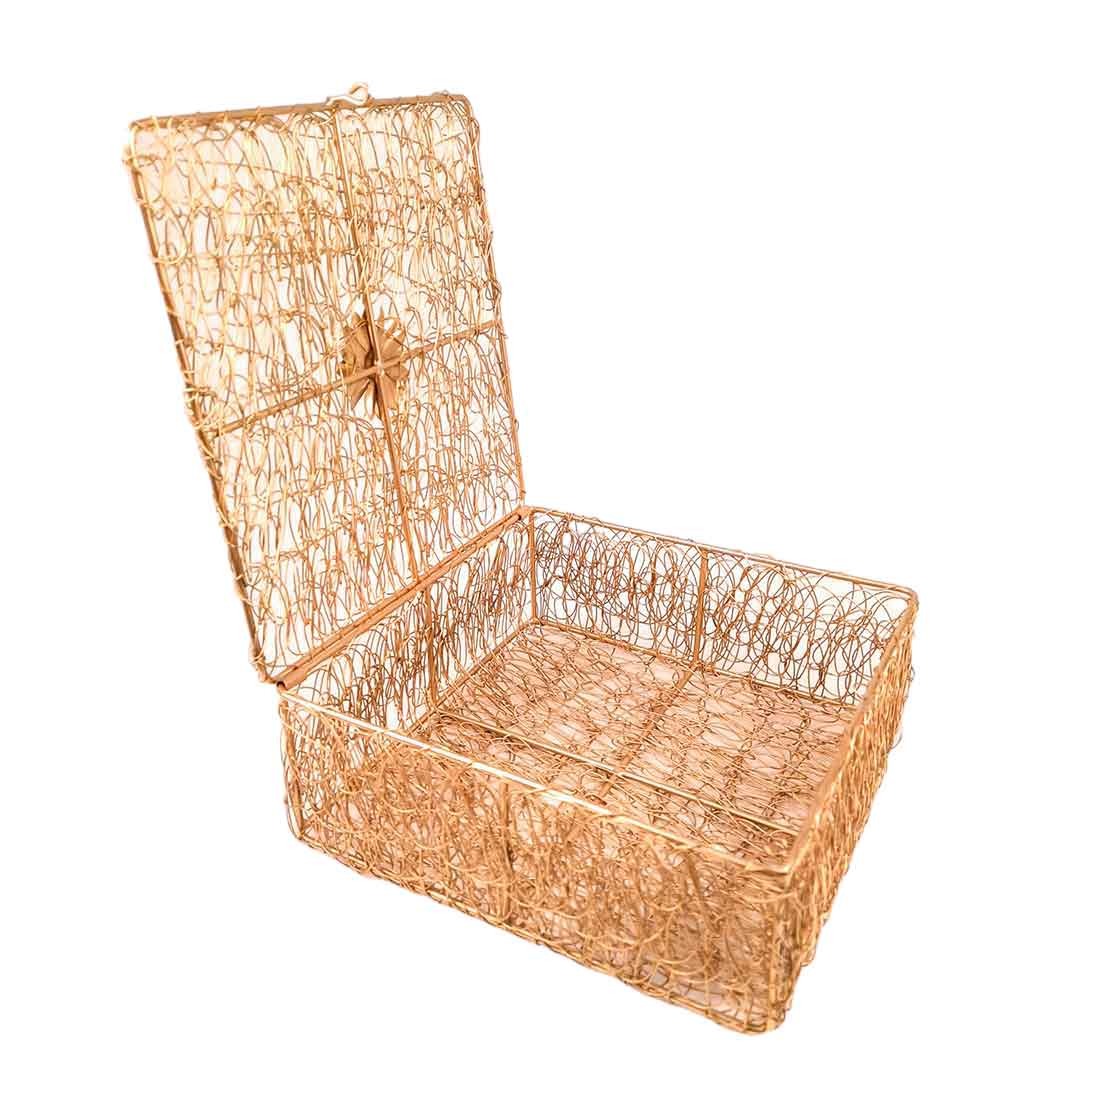 Mesh Wire Box With Lid | Multipurpose Golden Box - For Home Decor, Wedding Gift, Shagun Basket - 9 Inch Apkamart